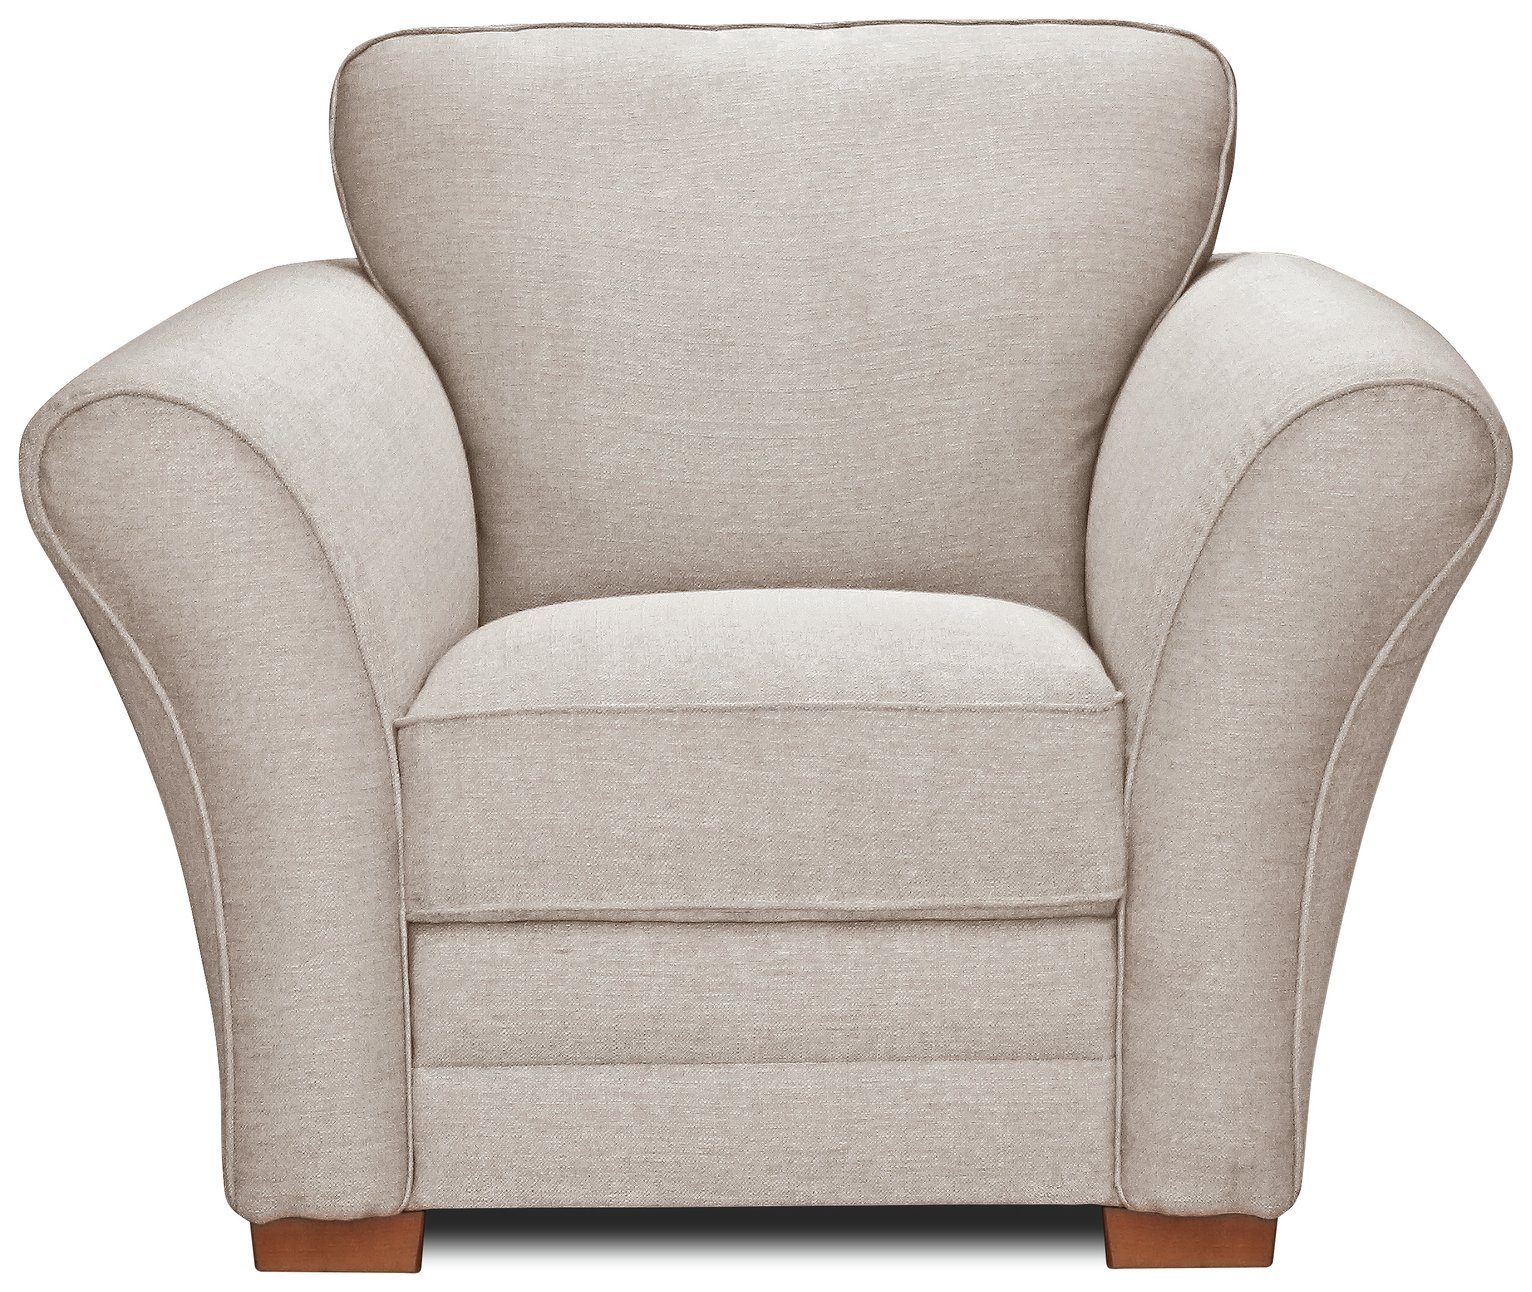 Argos Home New Thornton Fabric Chair Natural Reviews